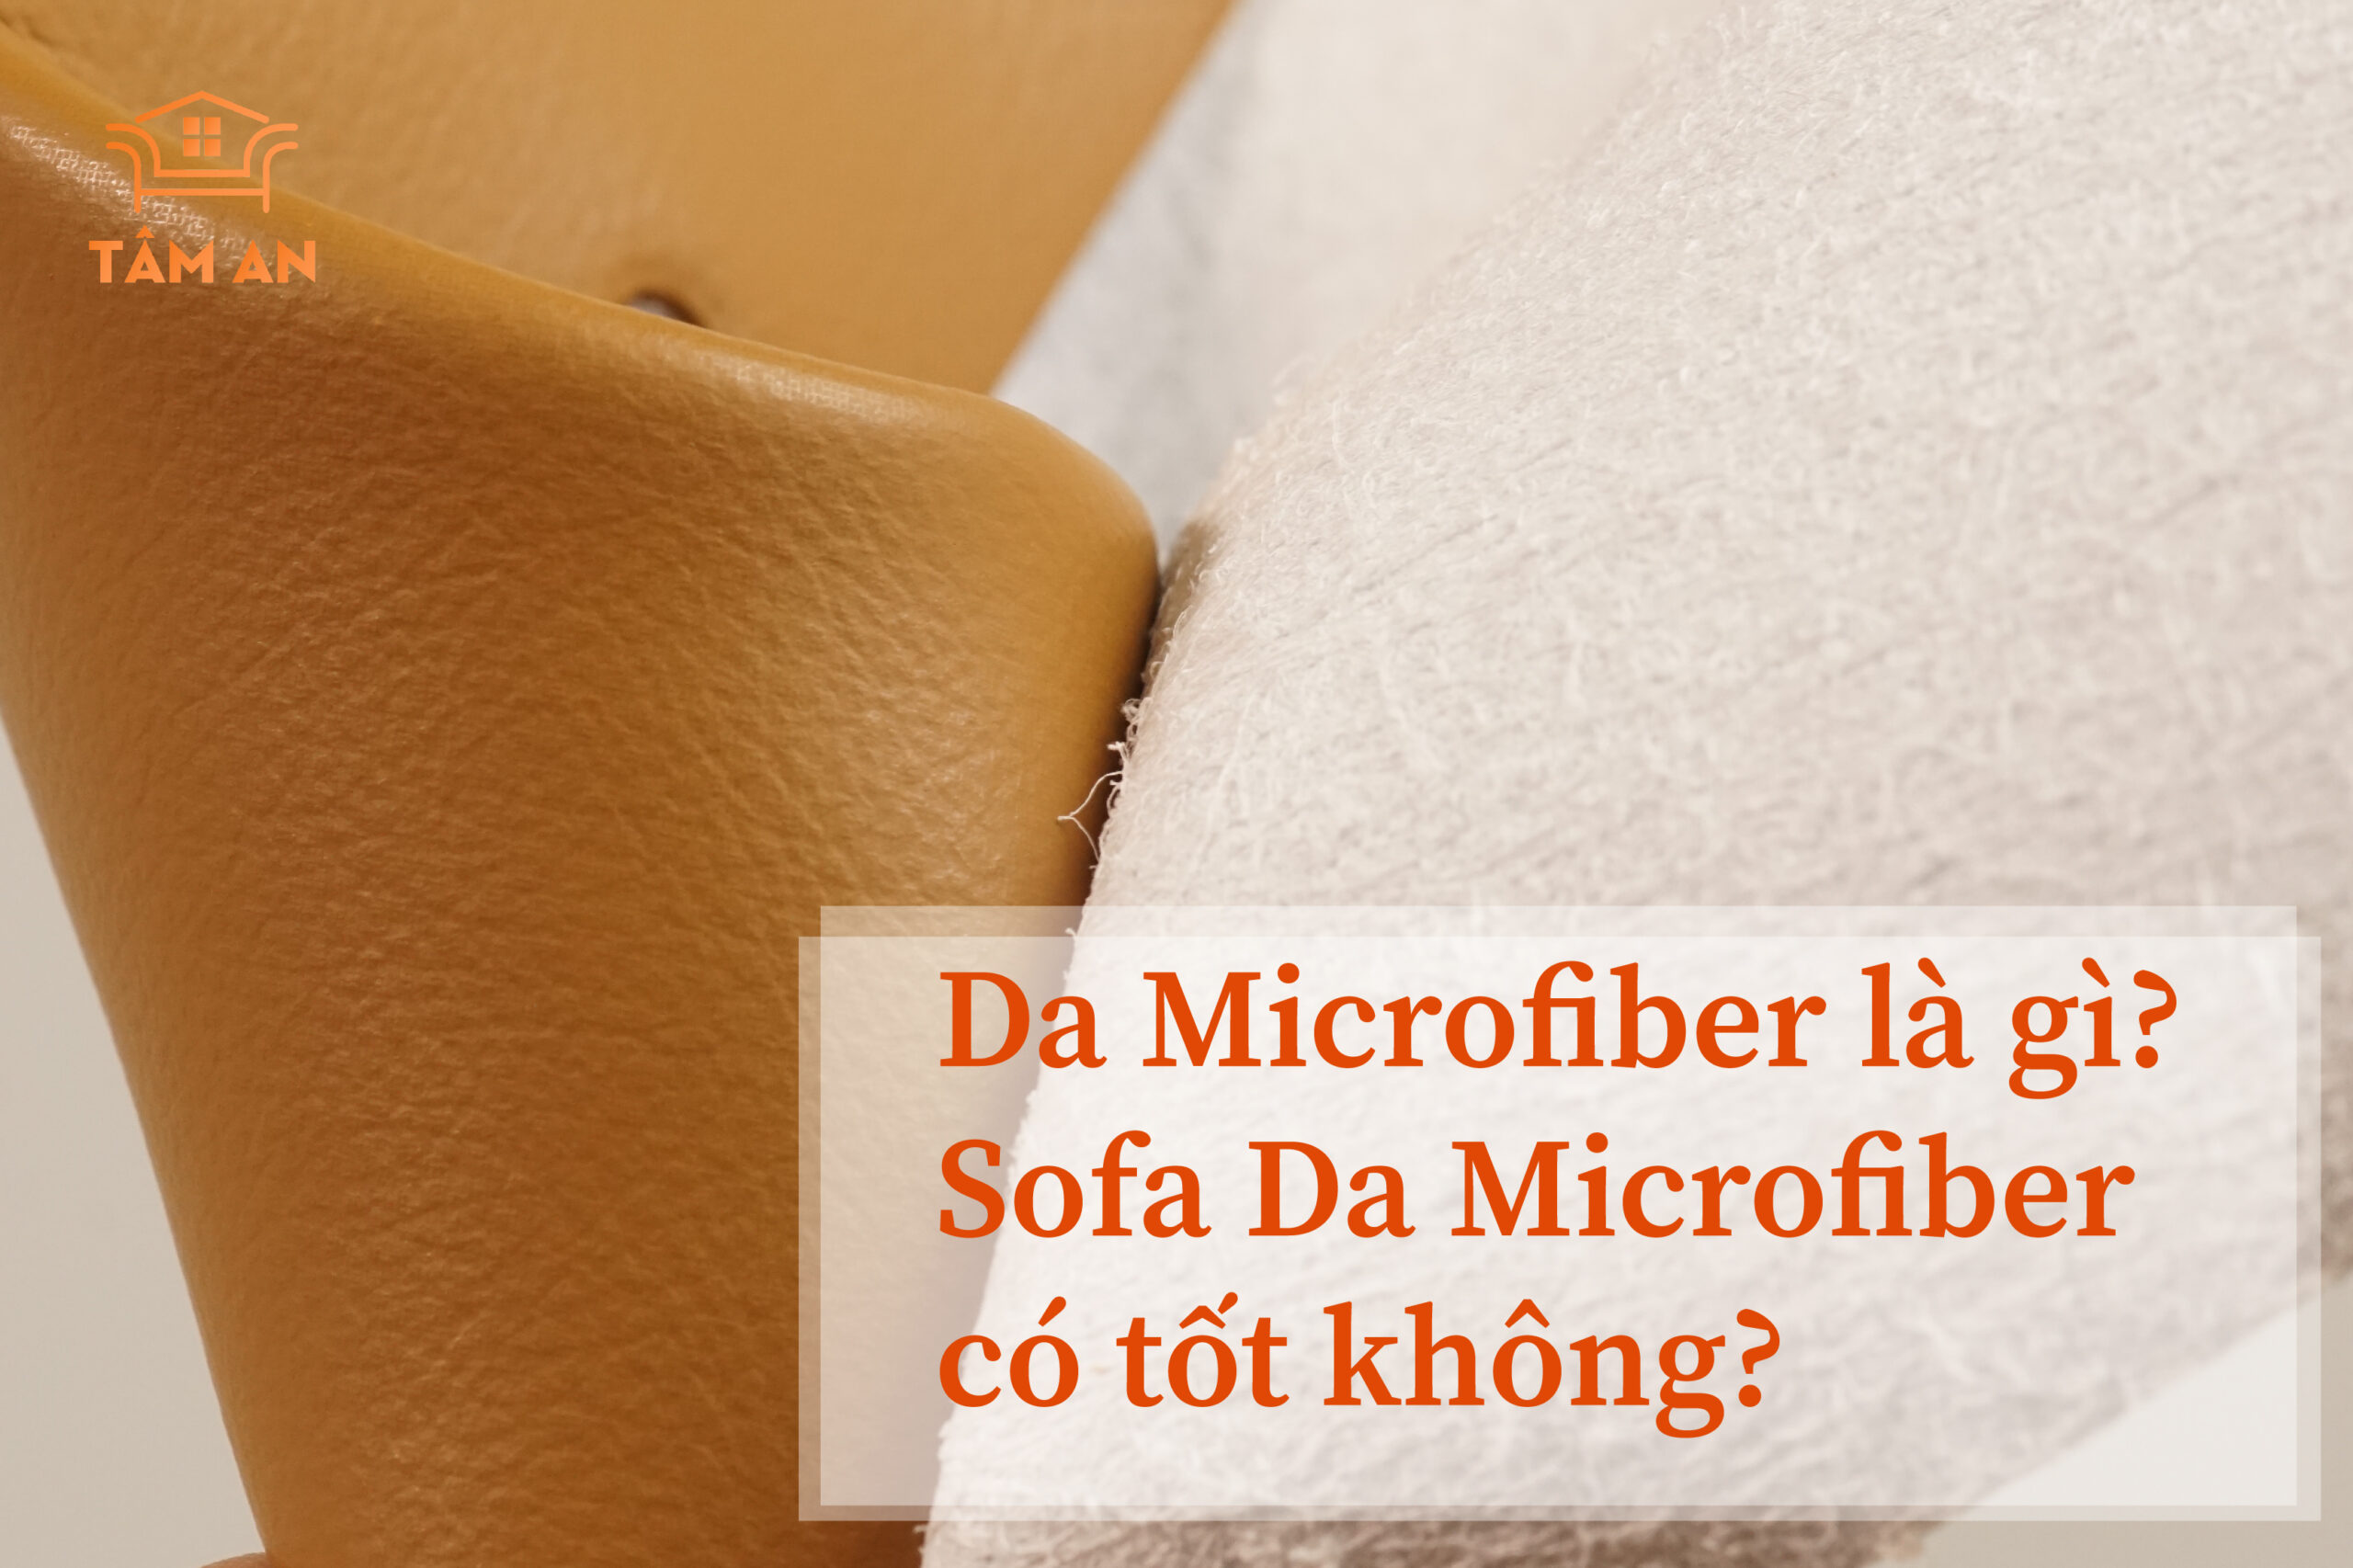 Sofa da Microfiber